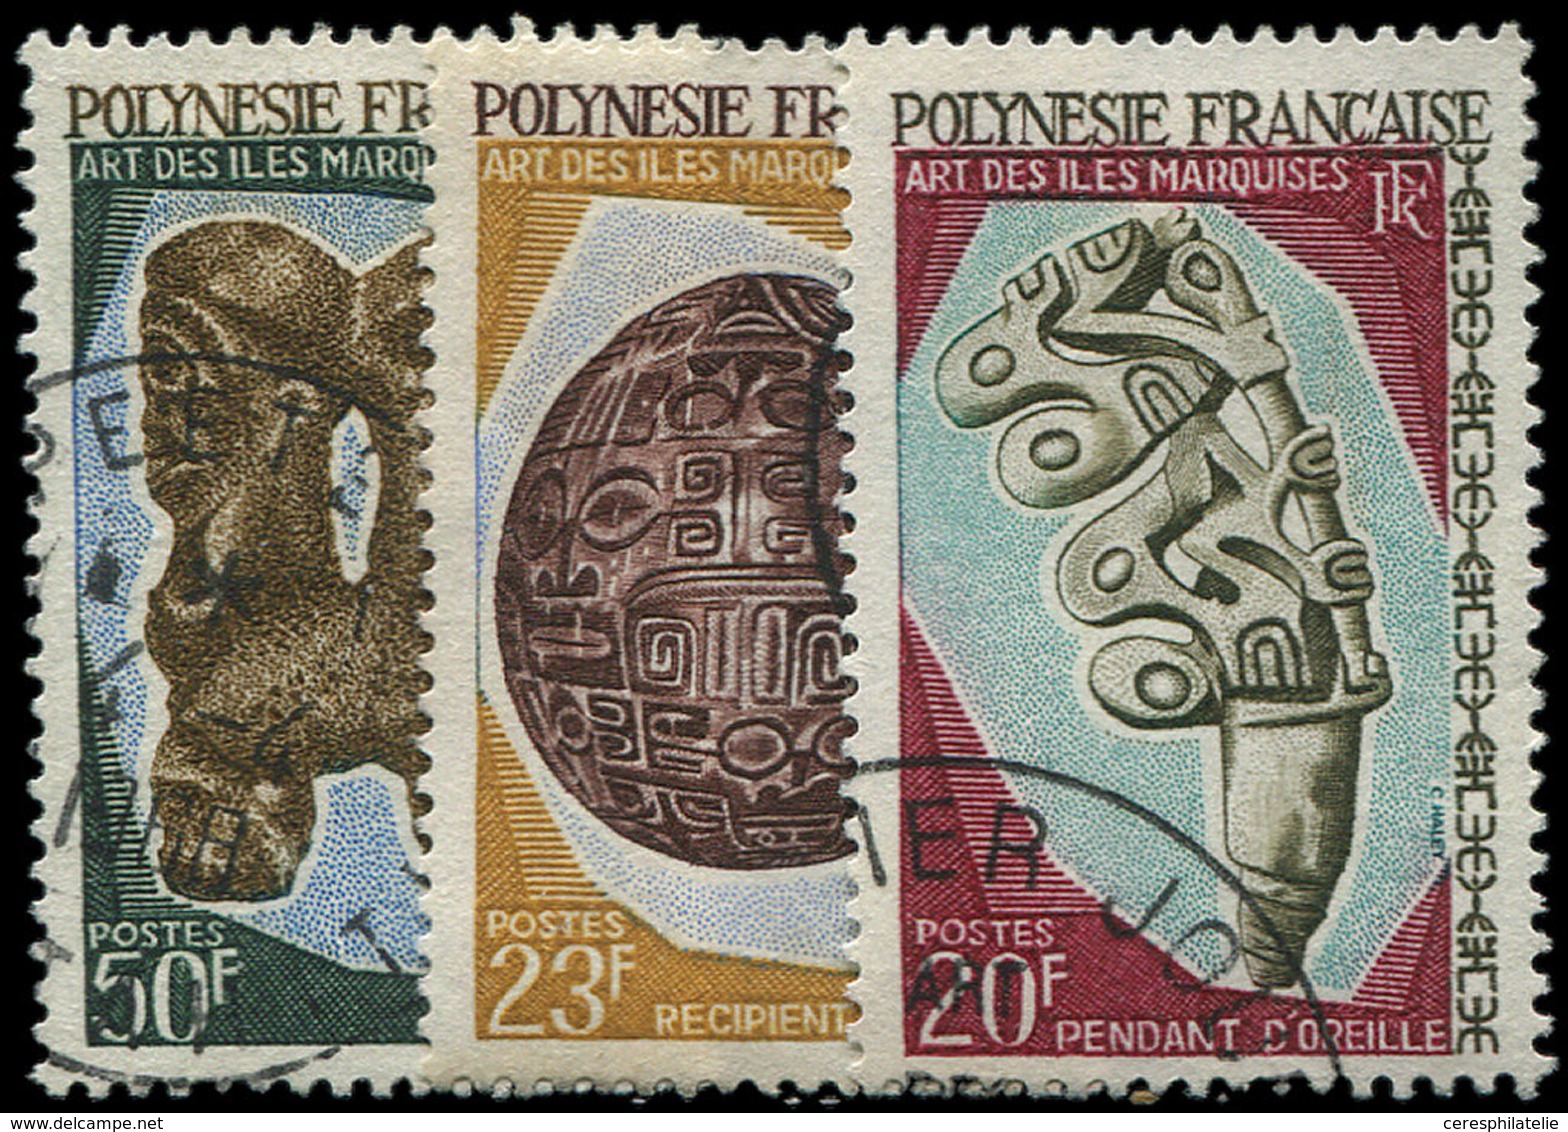 POLYNESIE FRANCAISE 52/59 : Arts Des Iles Marquises, TB - Unused Stamps